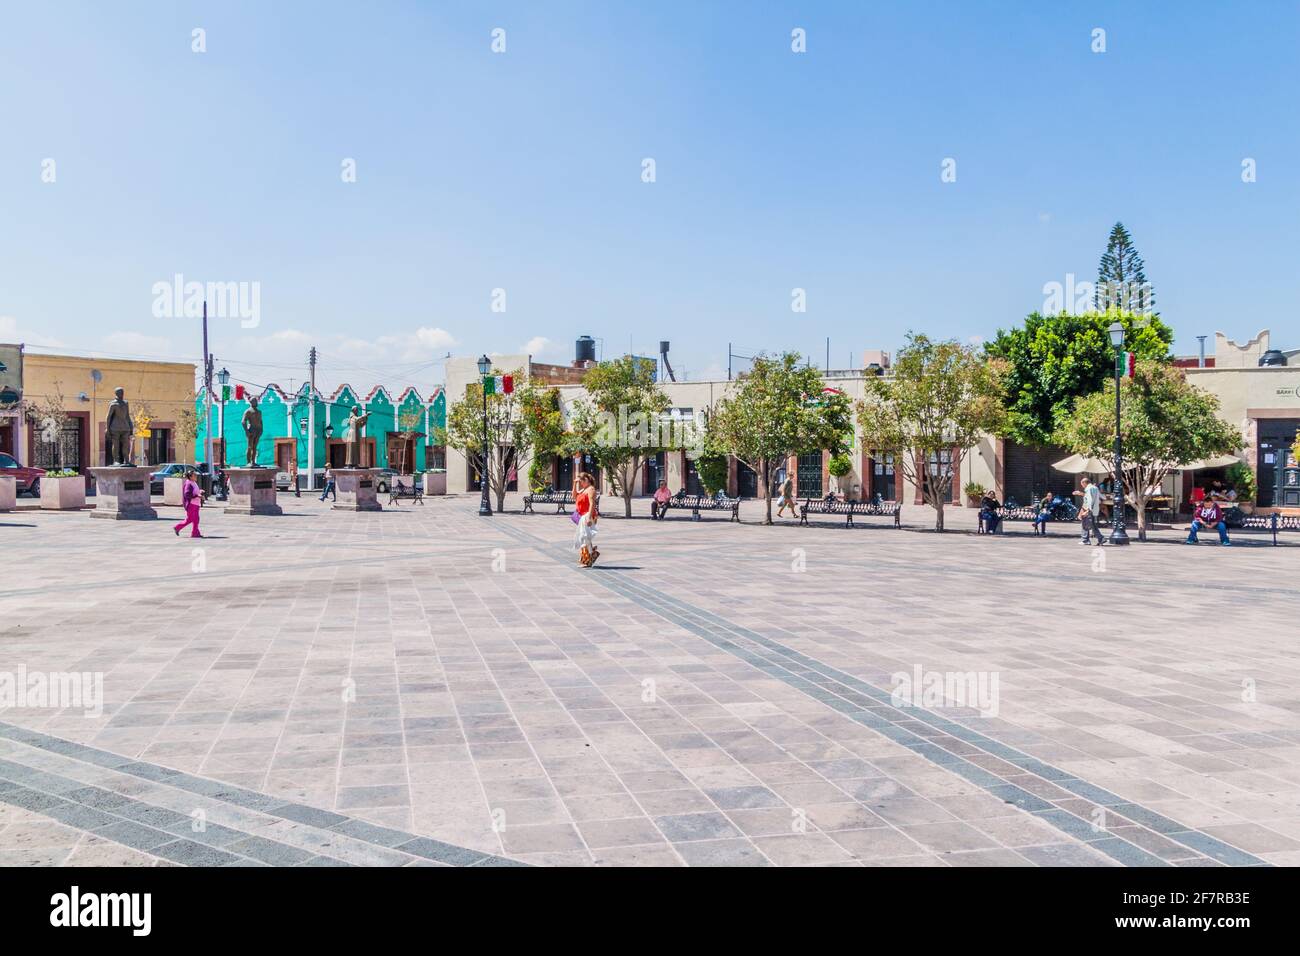 QUERETARO, MEXIQUE: 3 OCTOBRE 2016: Place Plaza de los Fundadores dans le centre de Queretaro, Mexique Banque D'Images